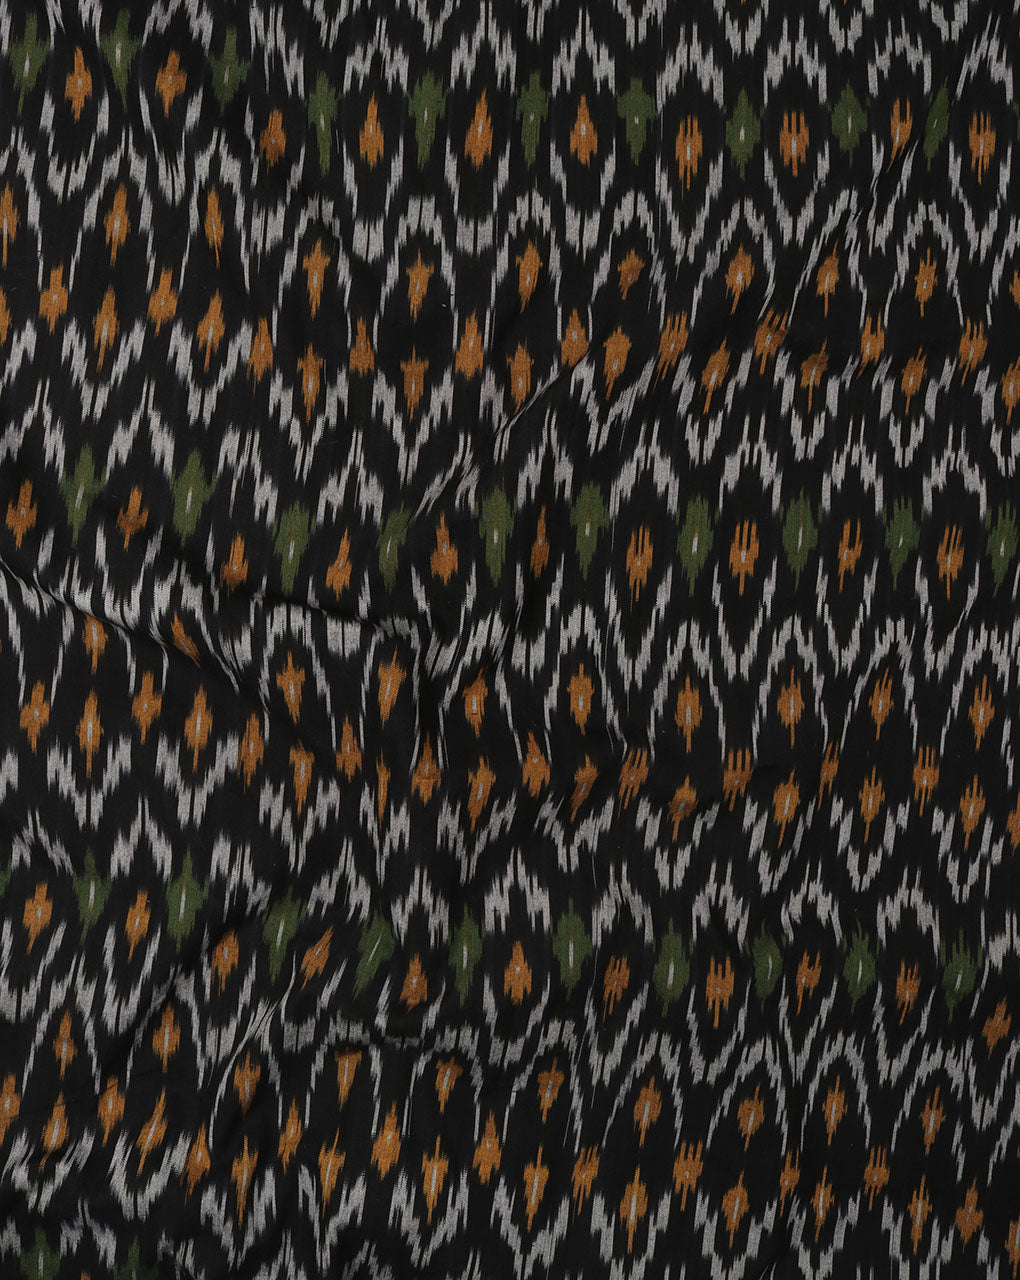 Black & Green Woven Abstract Mercerized Ikat Cotton Fabric - Fabriclore.com